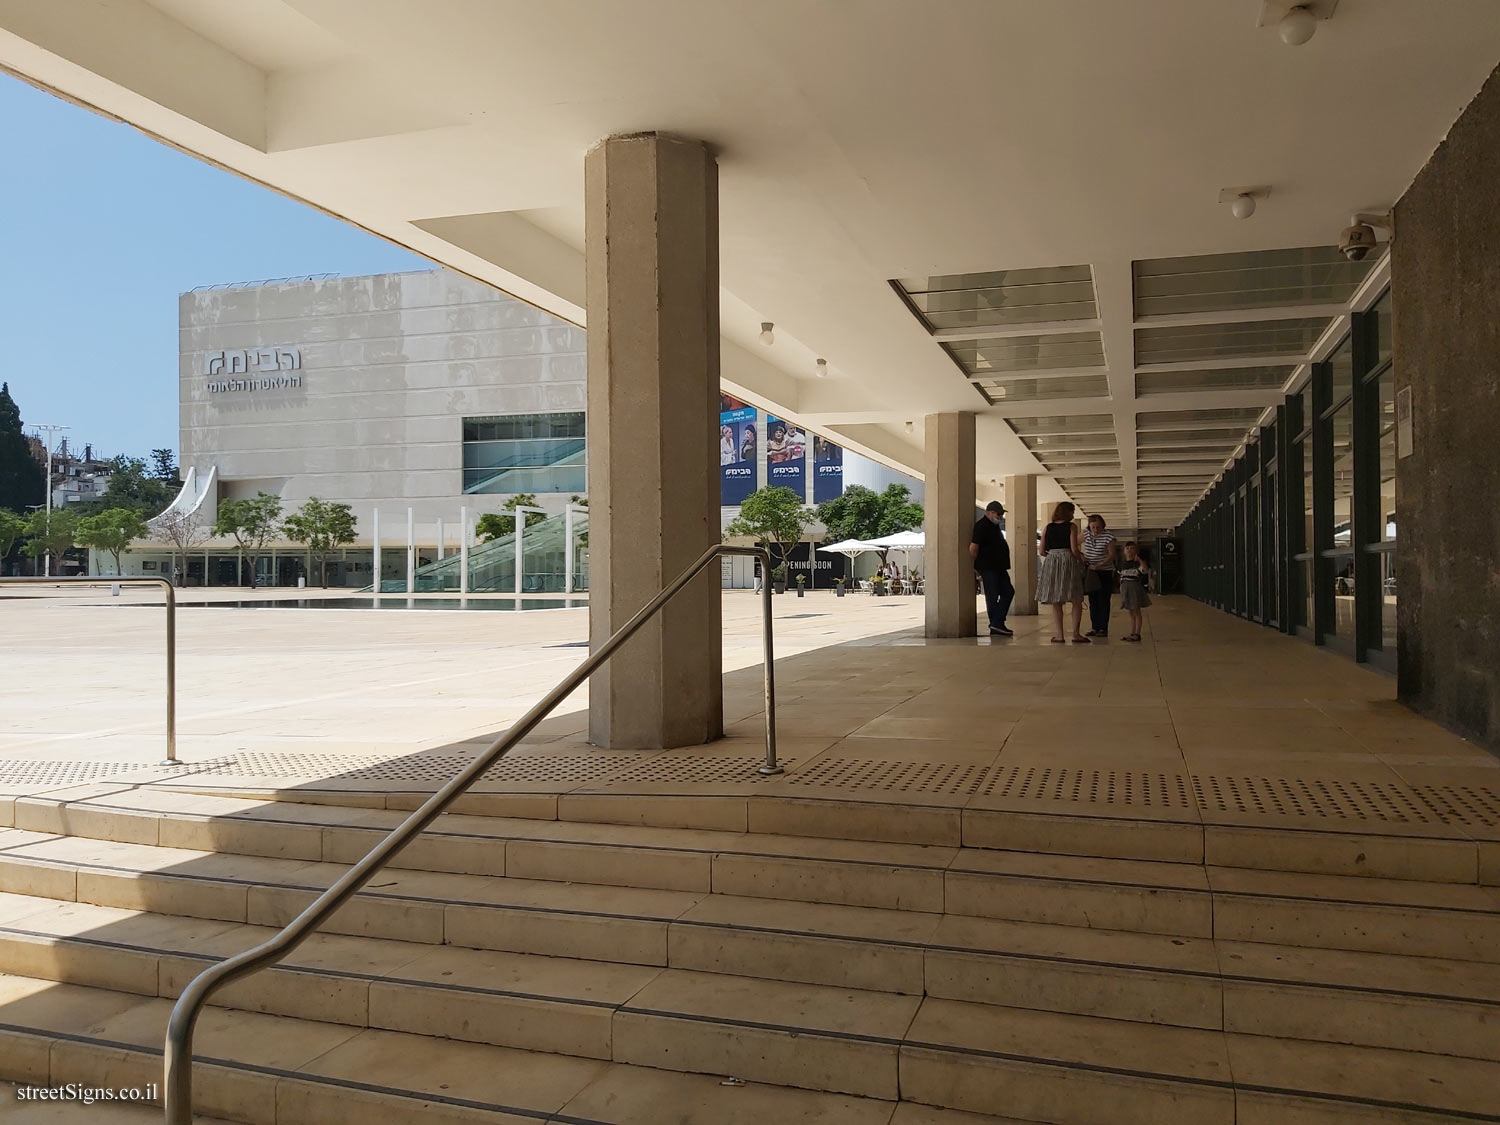 Tel Aviv - Leonard Bernstein Plaza - Huberman St 1, Tel Aviv-Yafo, Israel